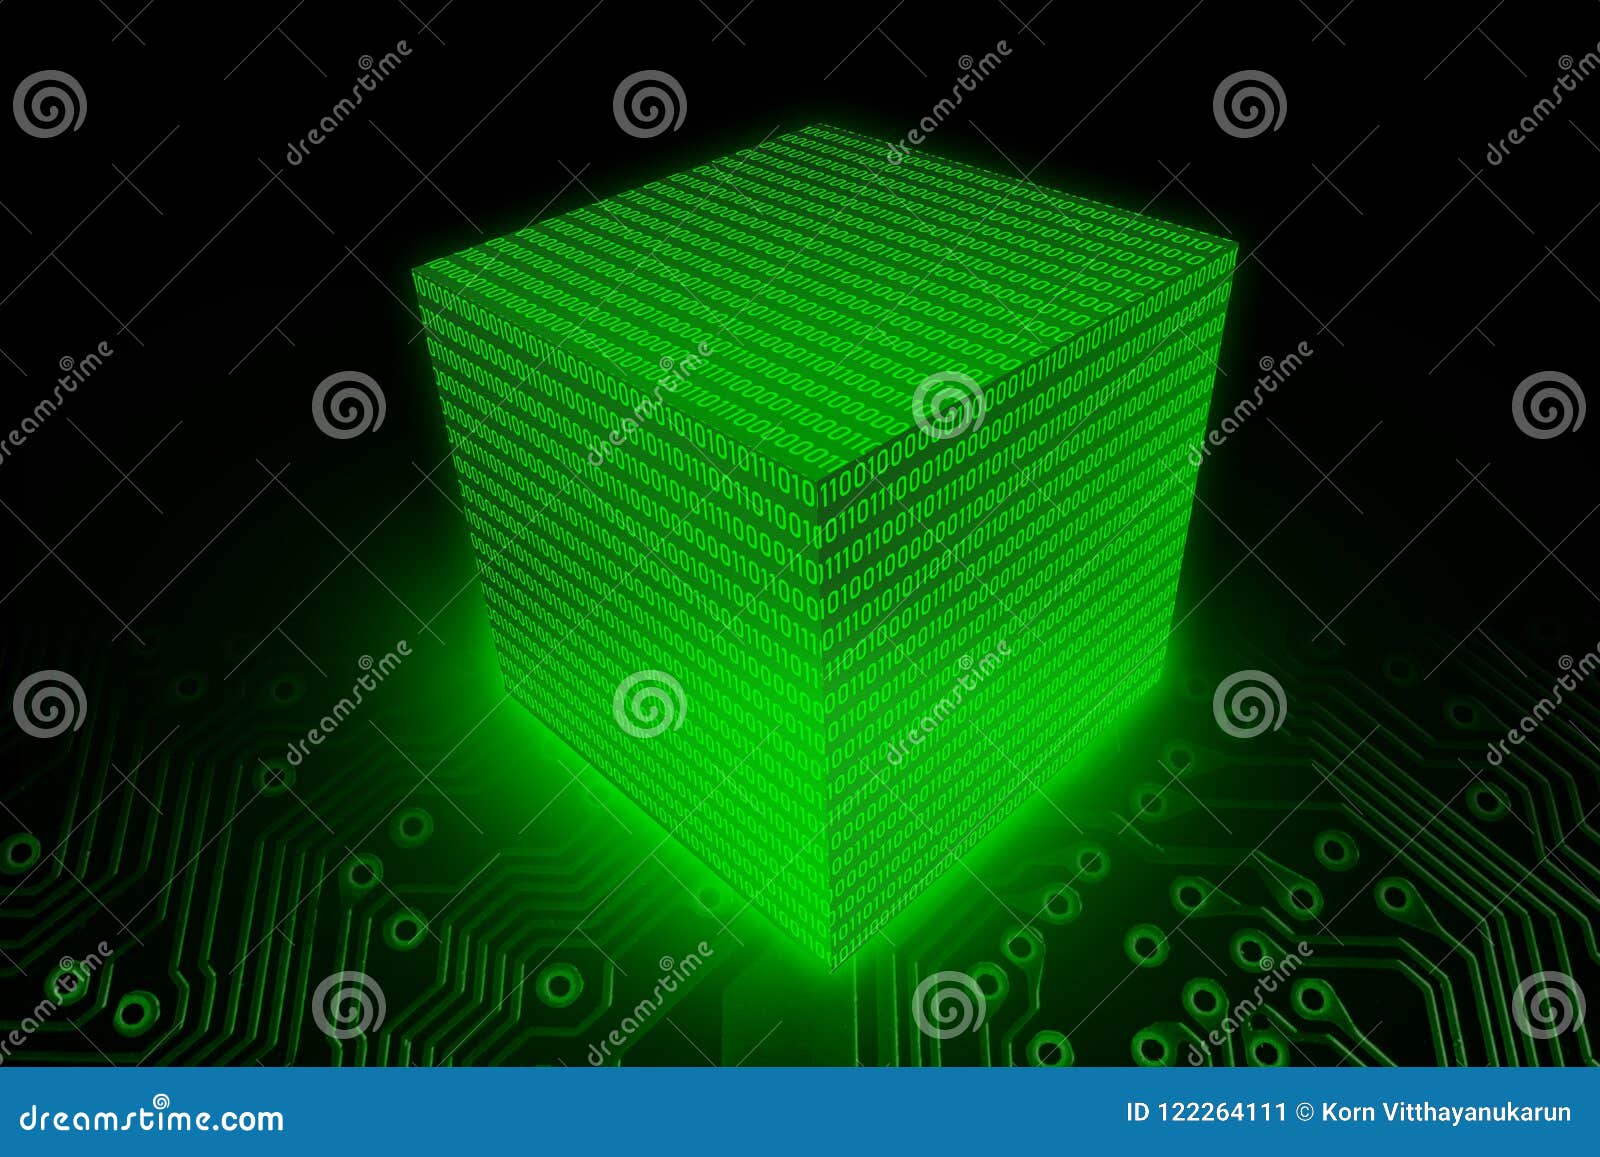 Code cube. Бинарный куб. Матрица куб. Кювр код кубик.